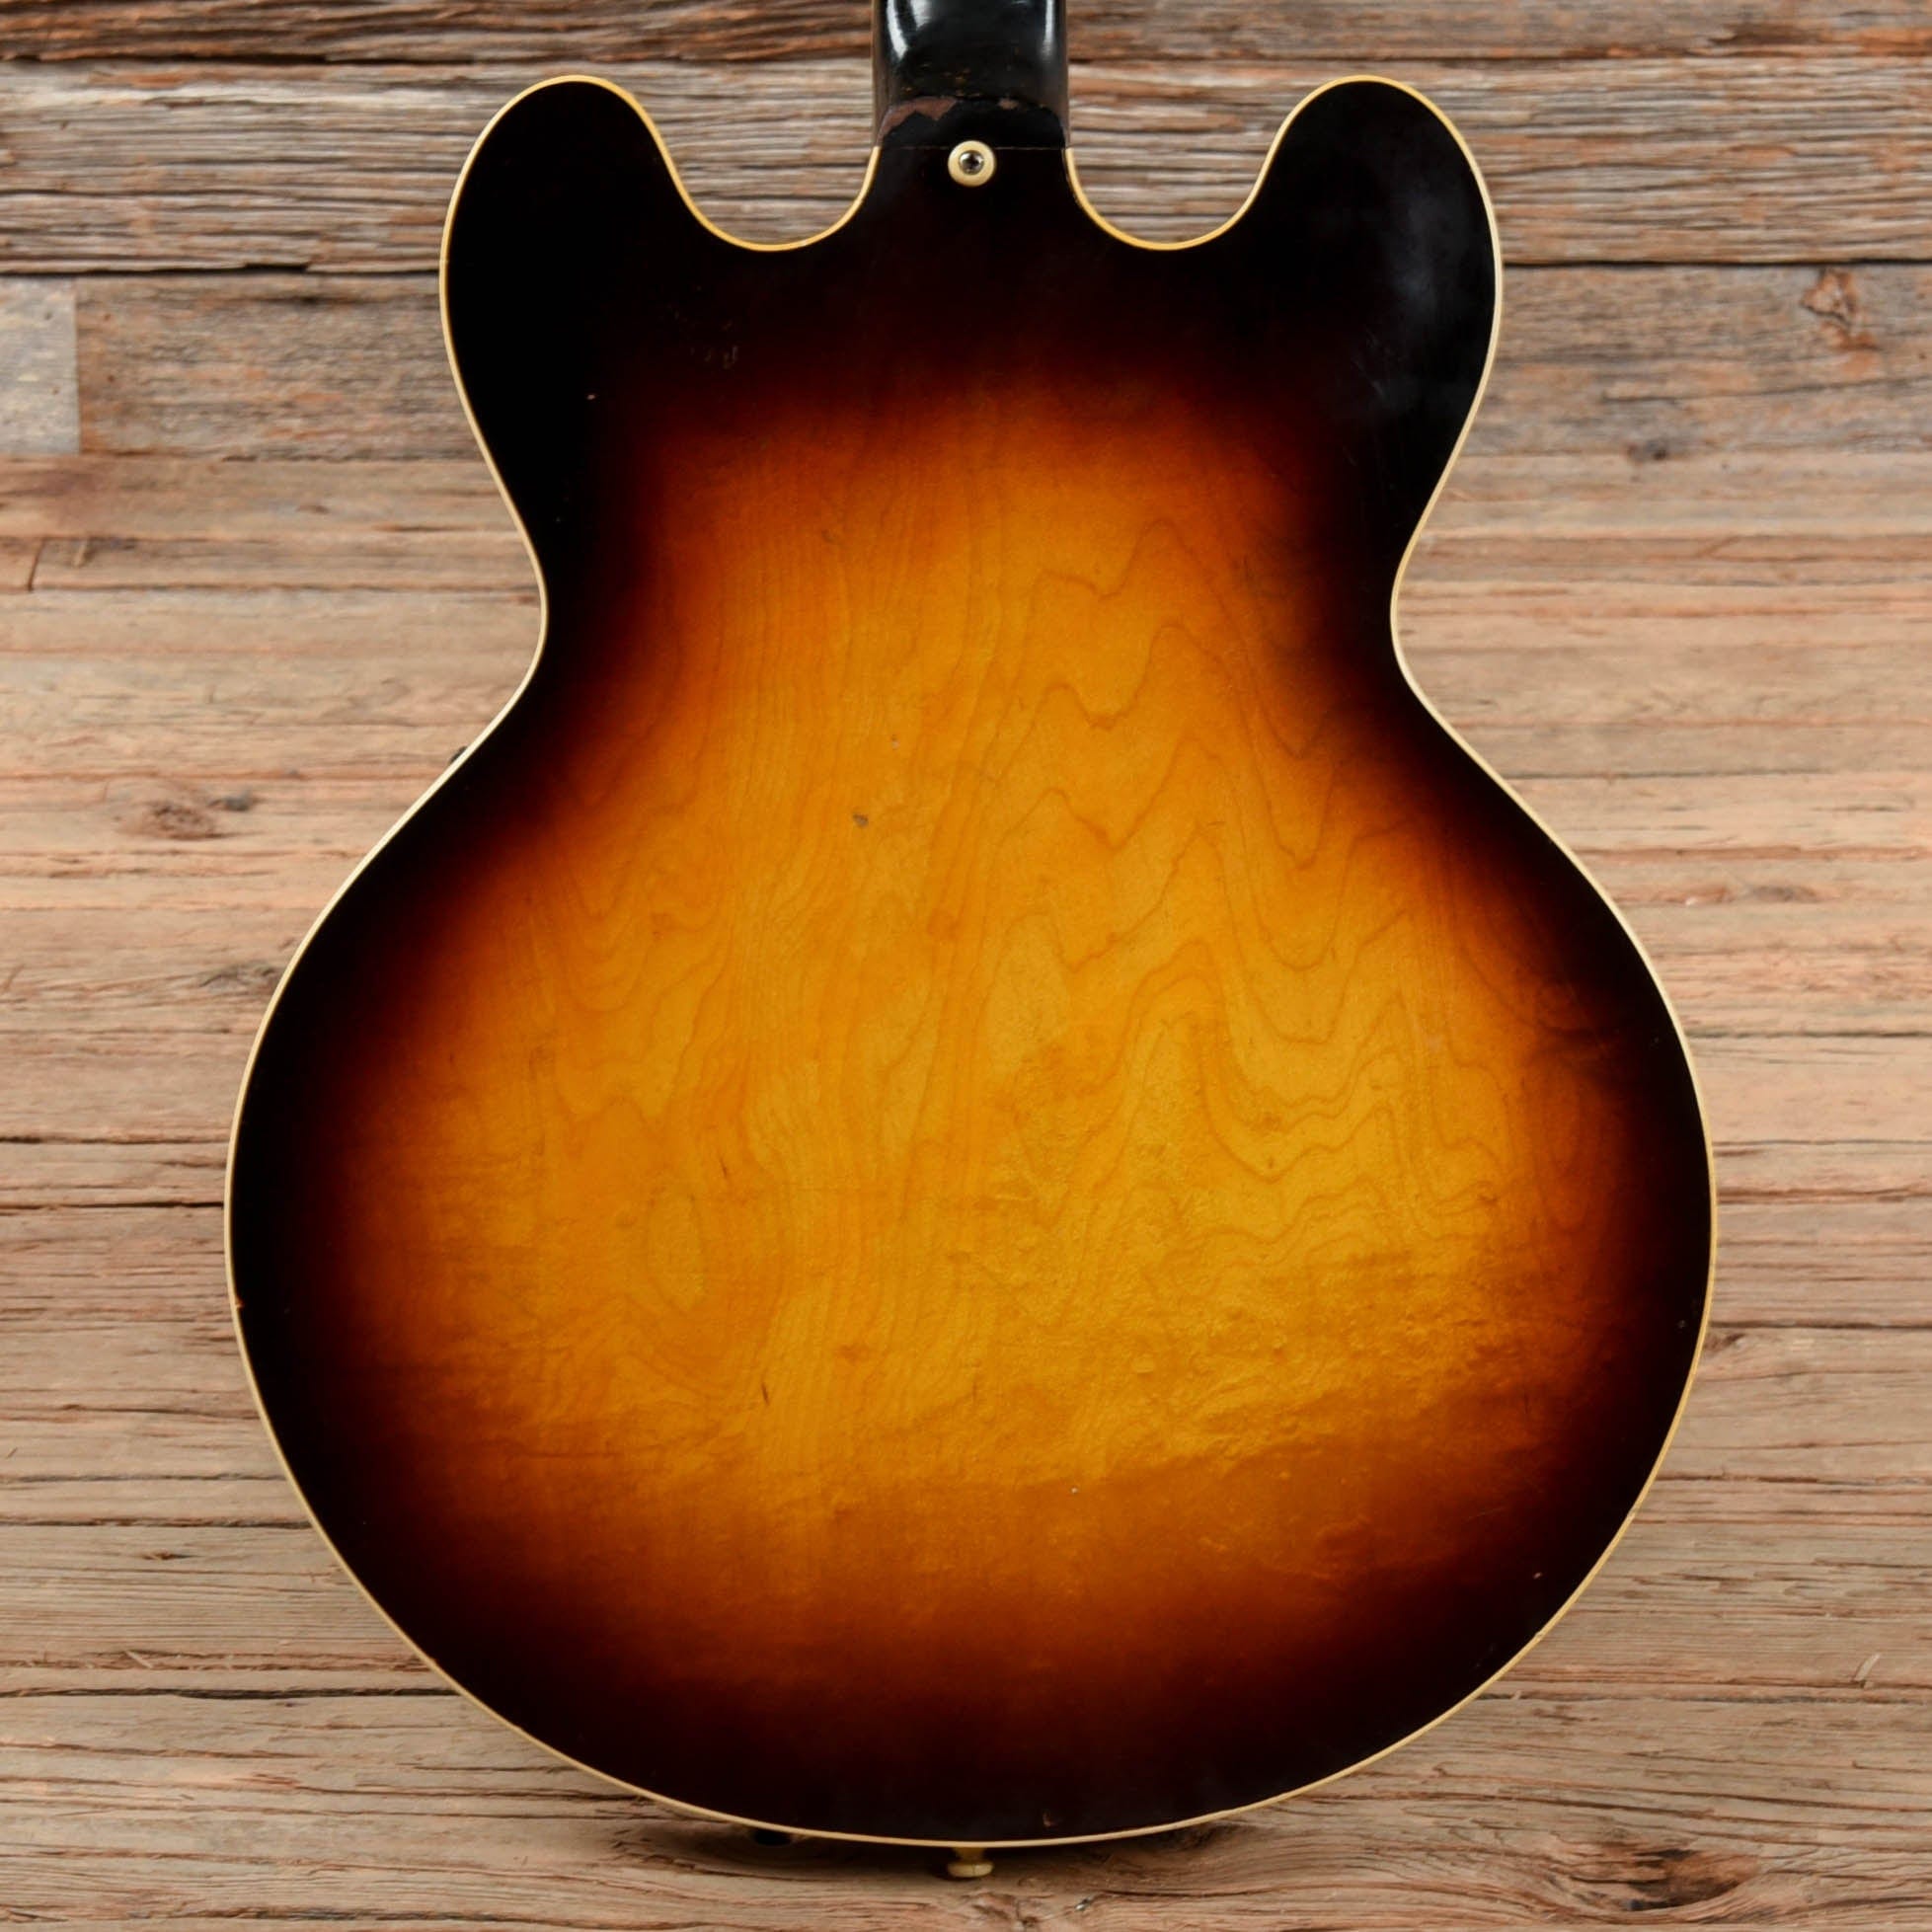 Gibson ES-335 Sunburst 1960 Electric Guitars / Semi-Hollow